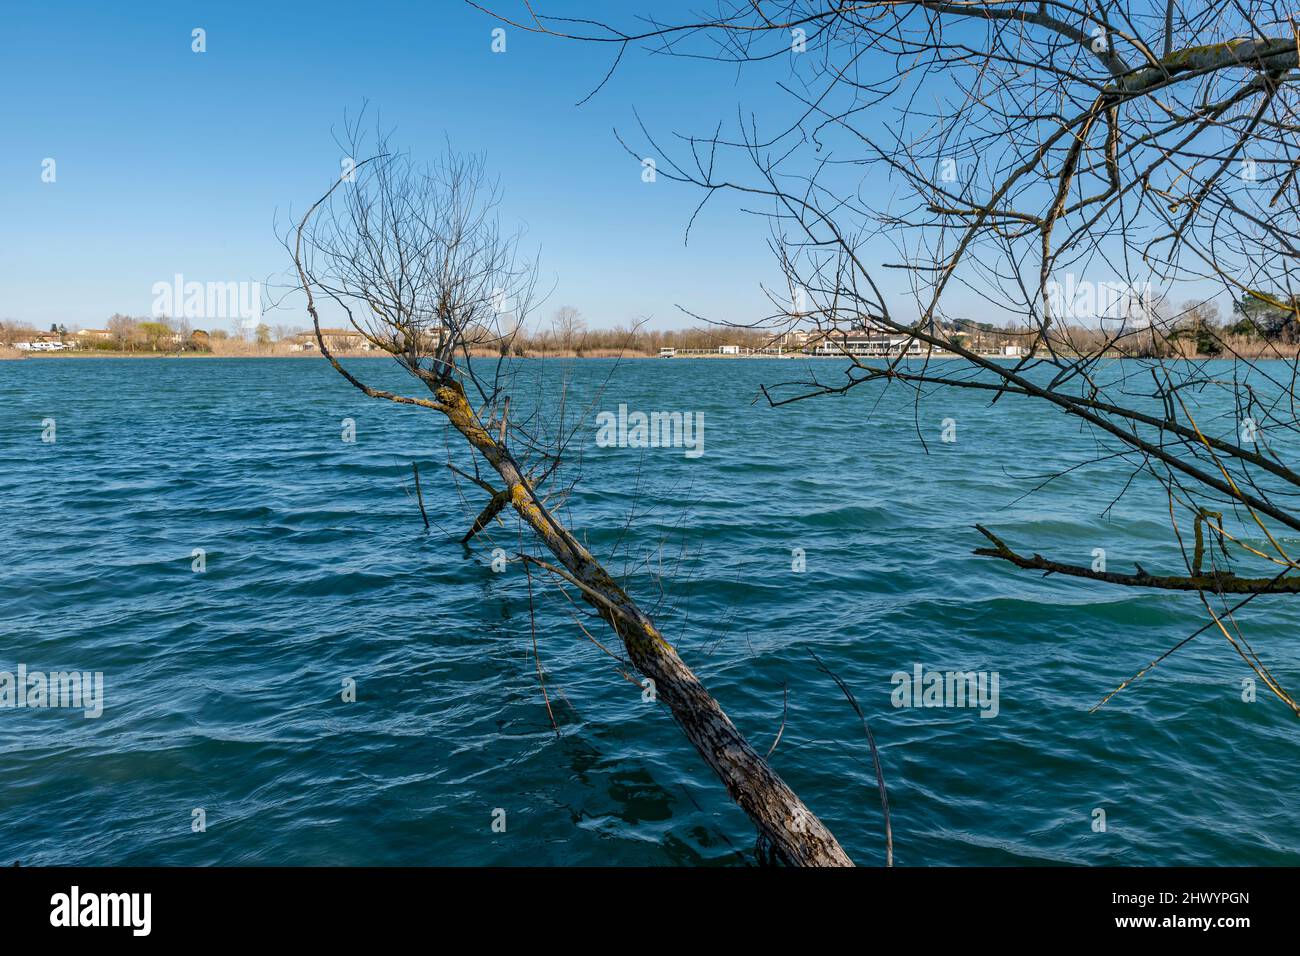 A glimpse of the Braccini lakes of Pontedera, Pisa, Italy Stock Photo